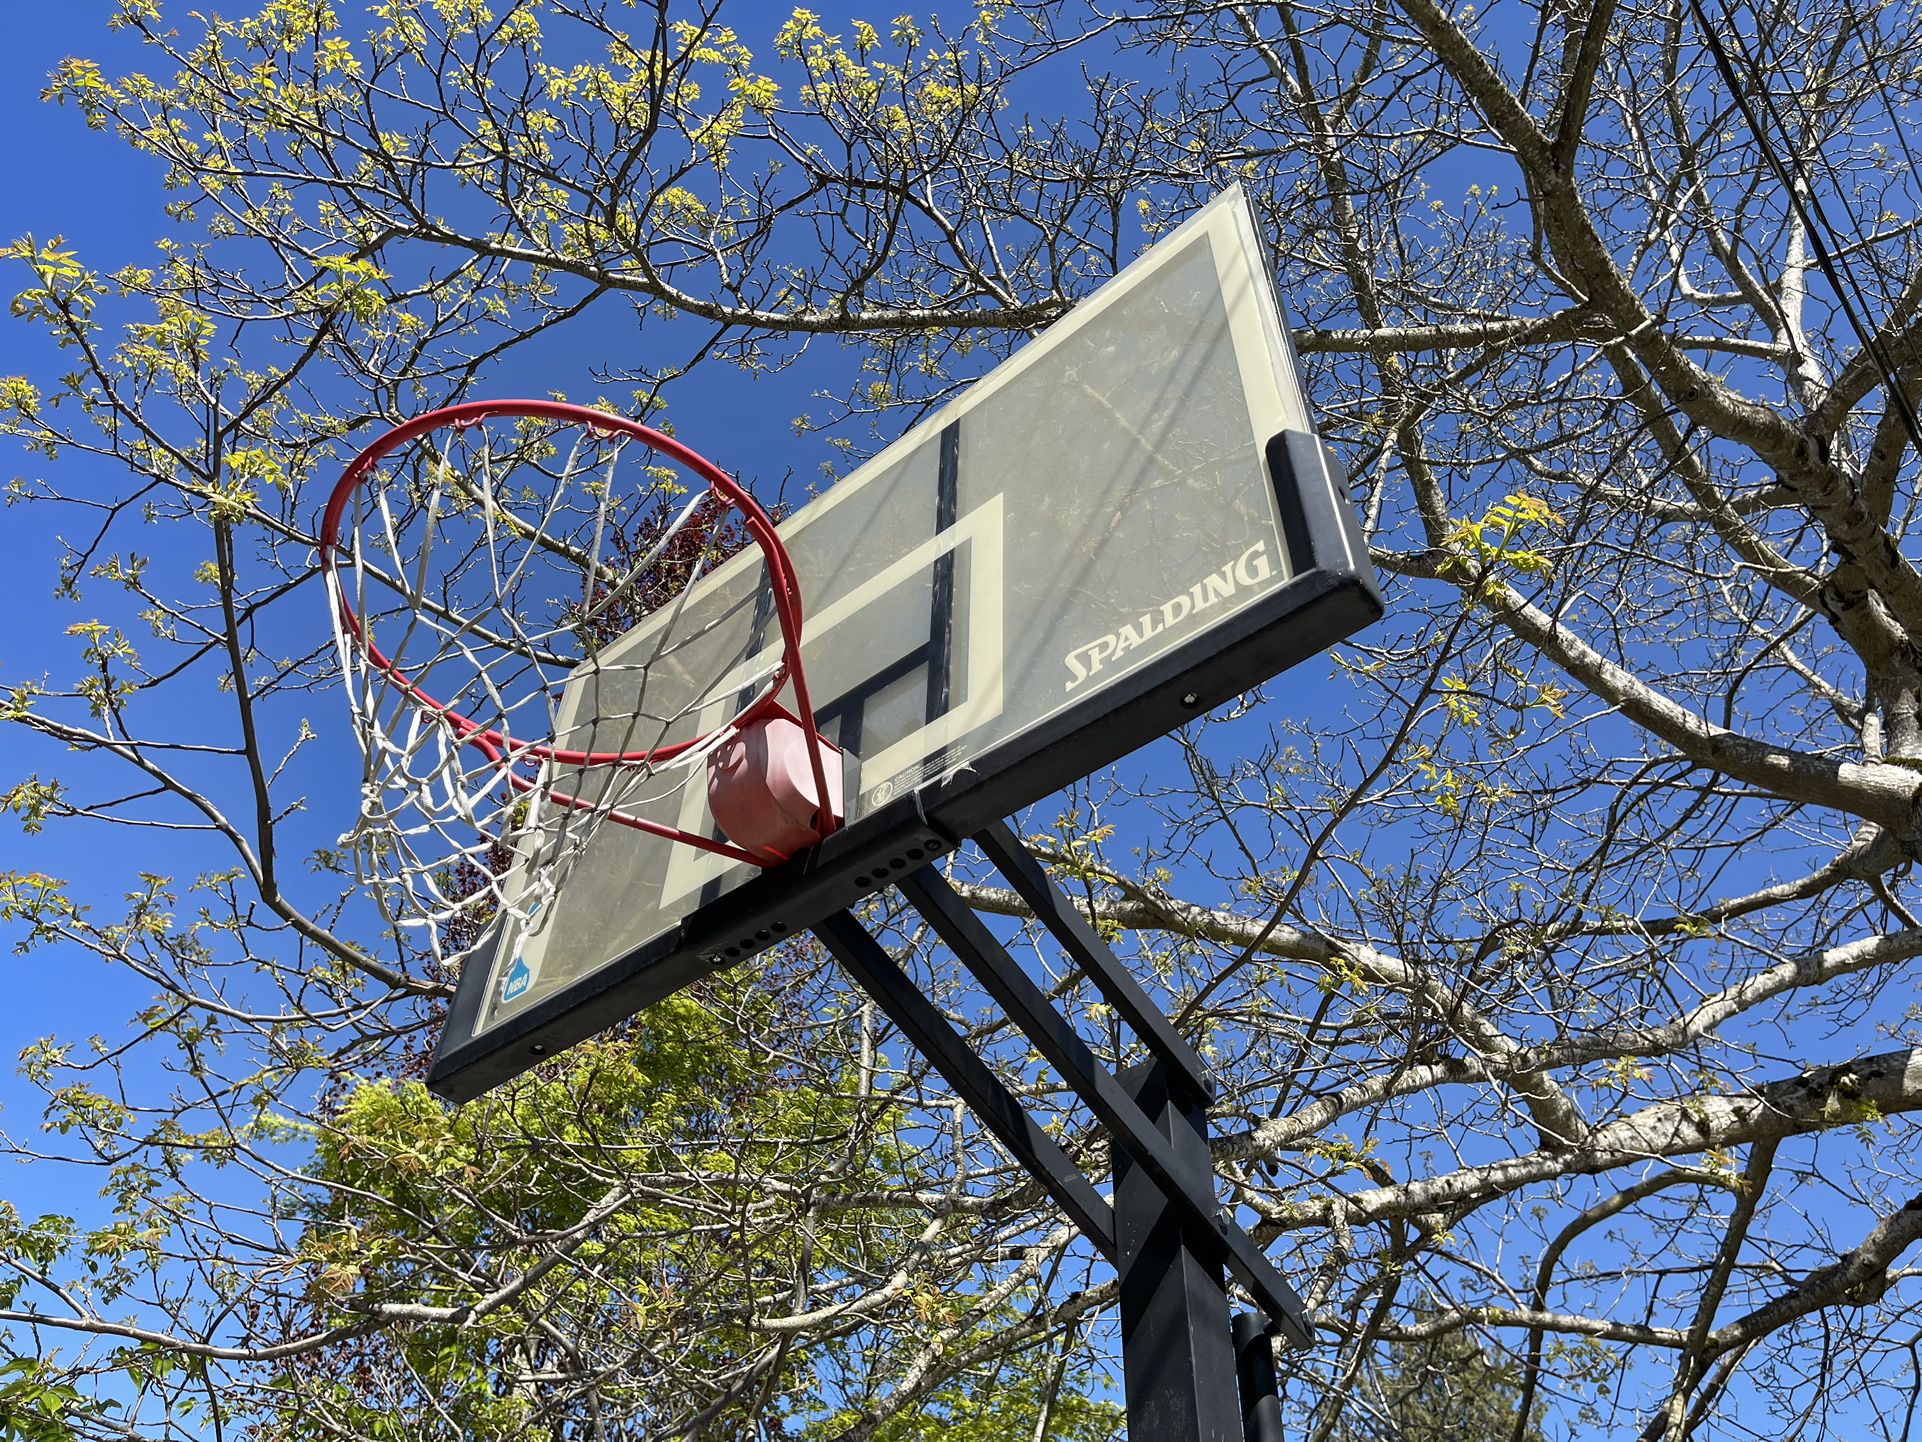 Spalding NBA 54” backboard basketball hoop - $80